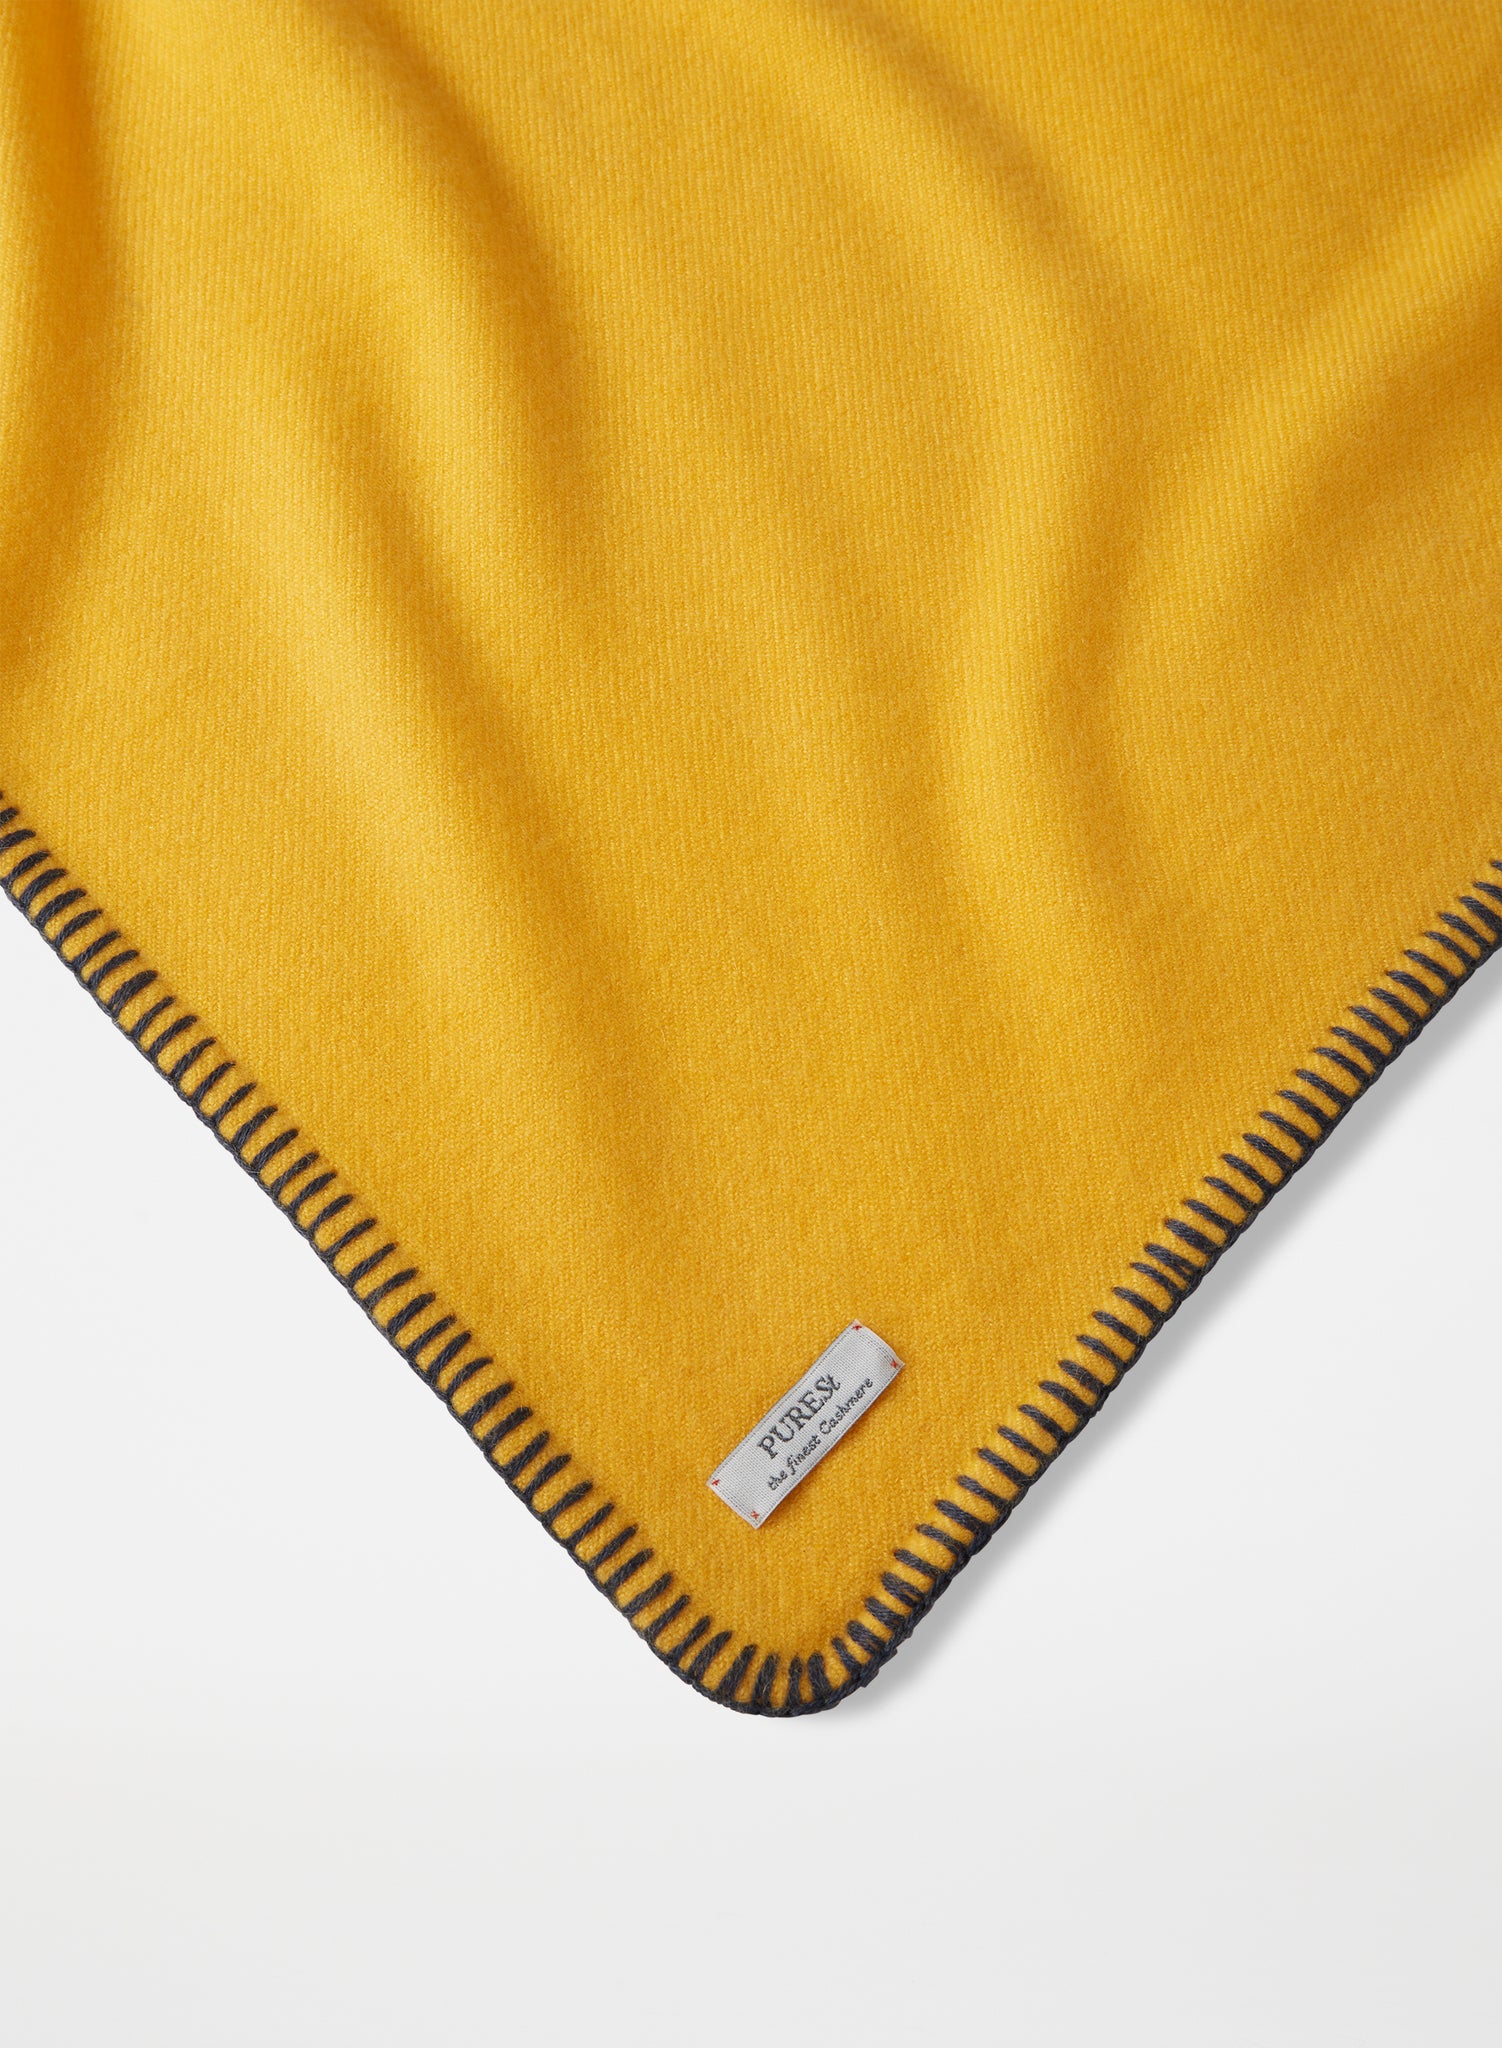 Fringe Blanket | Yellow